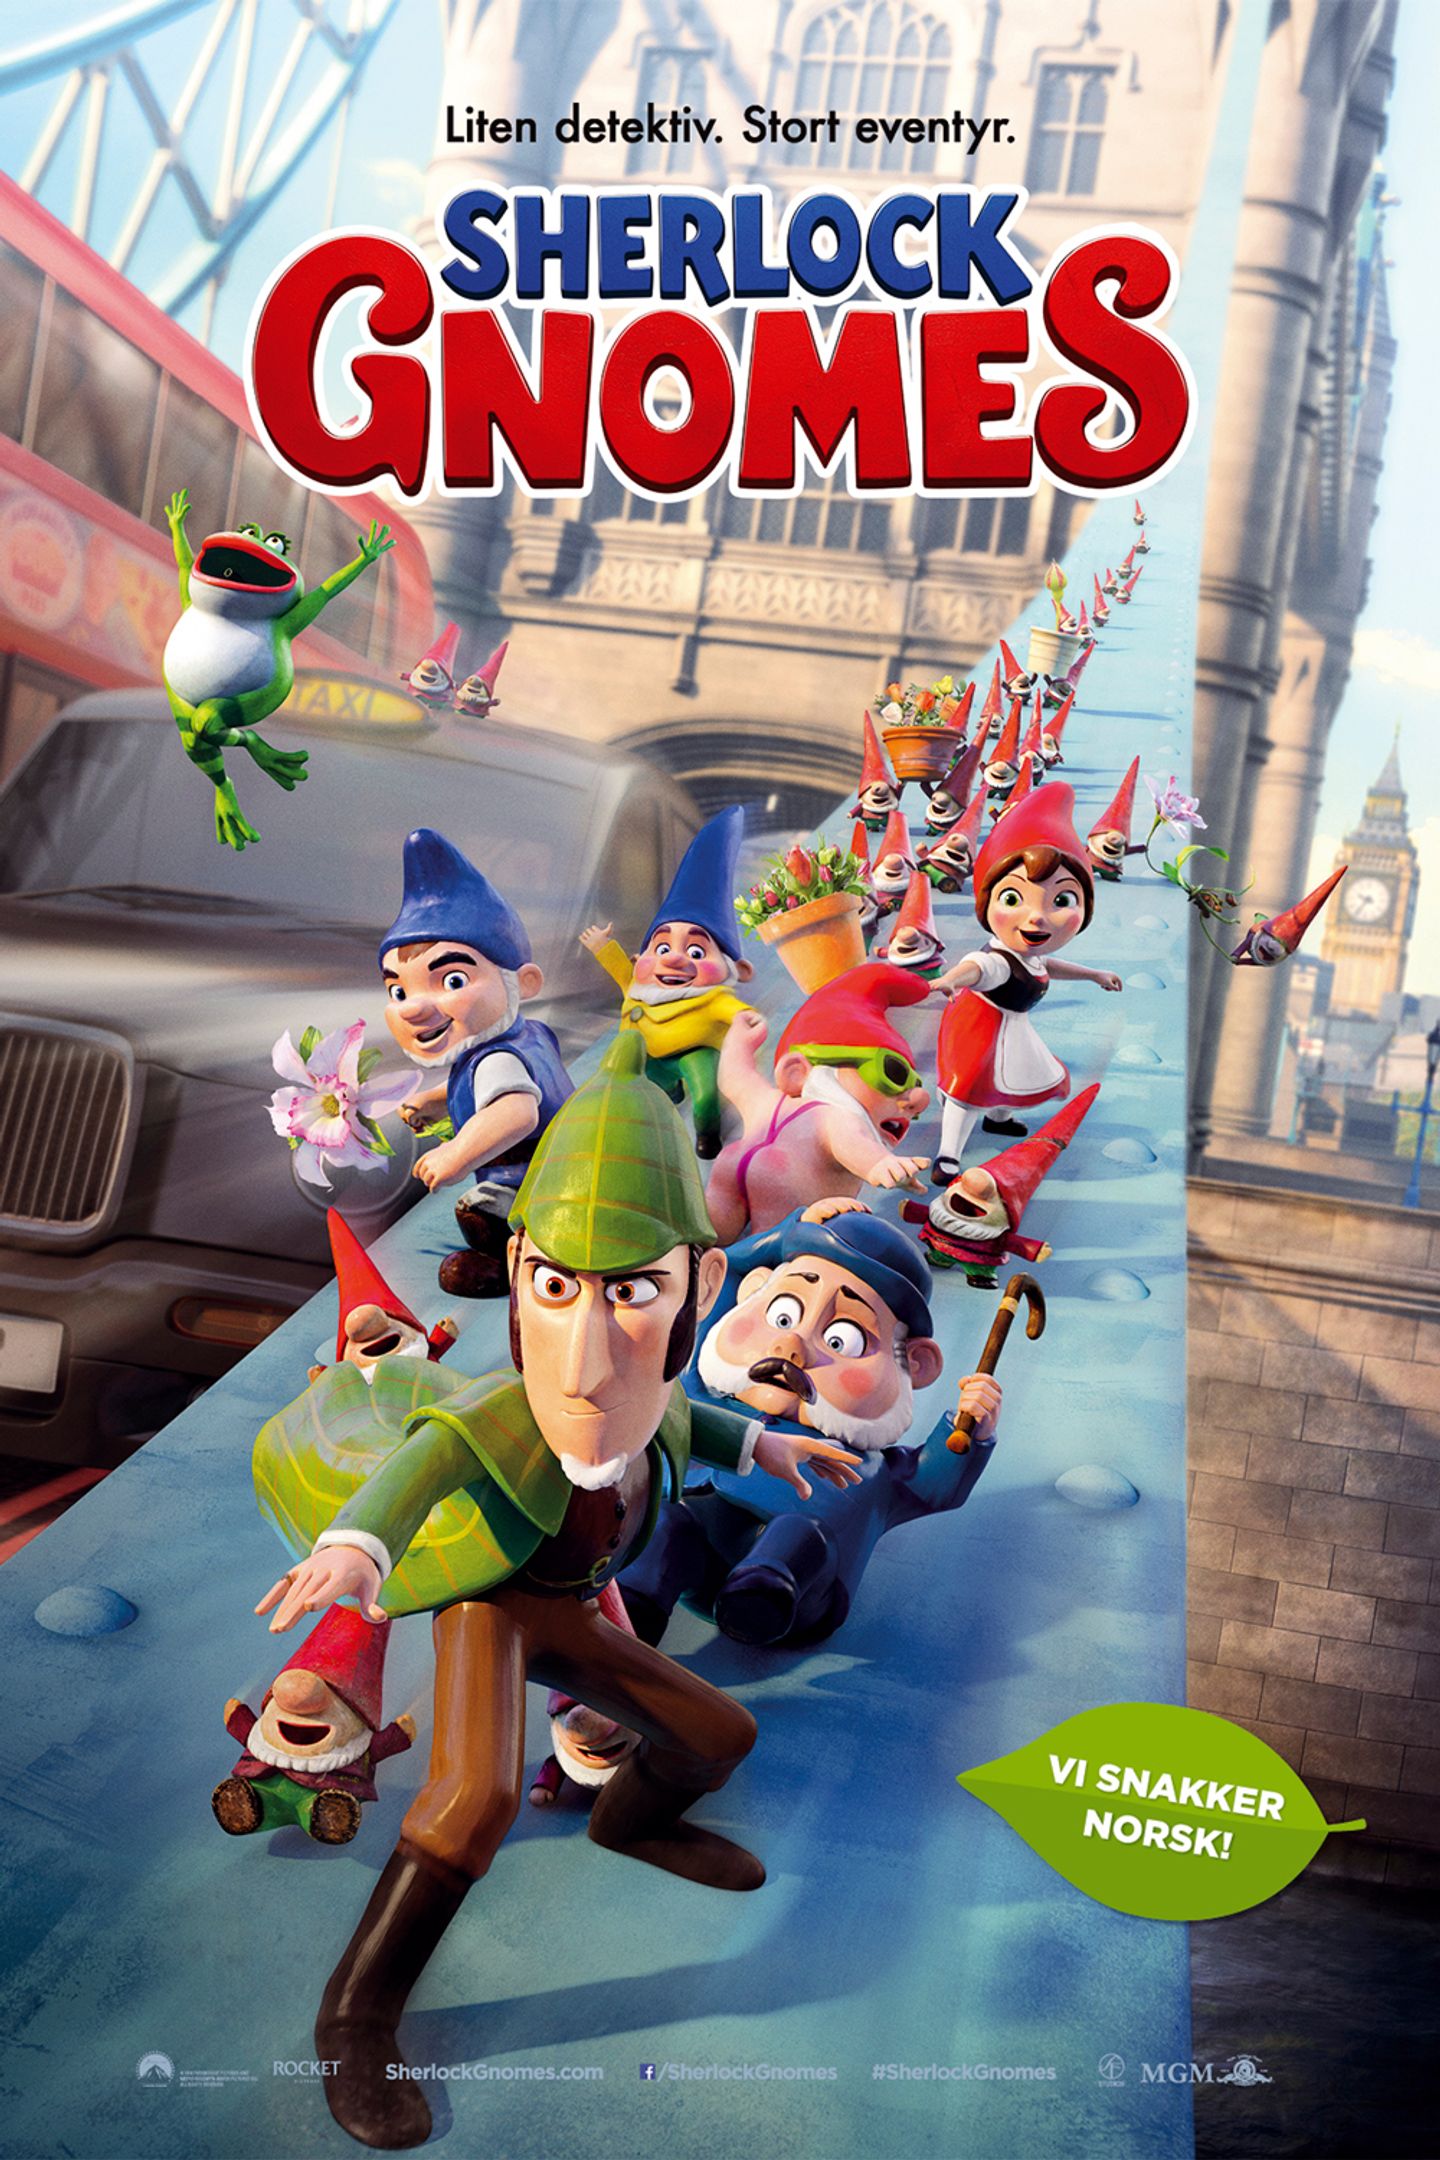 Sherlock Gnomes (Norske stemmer)